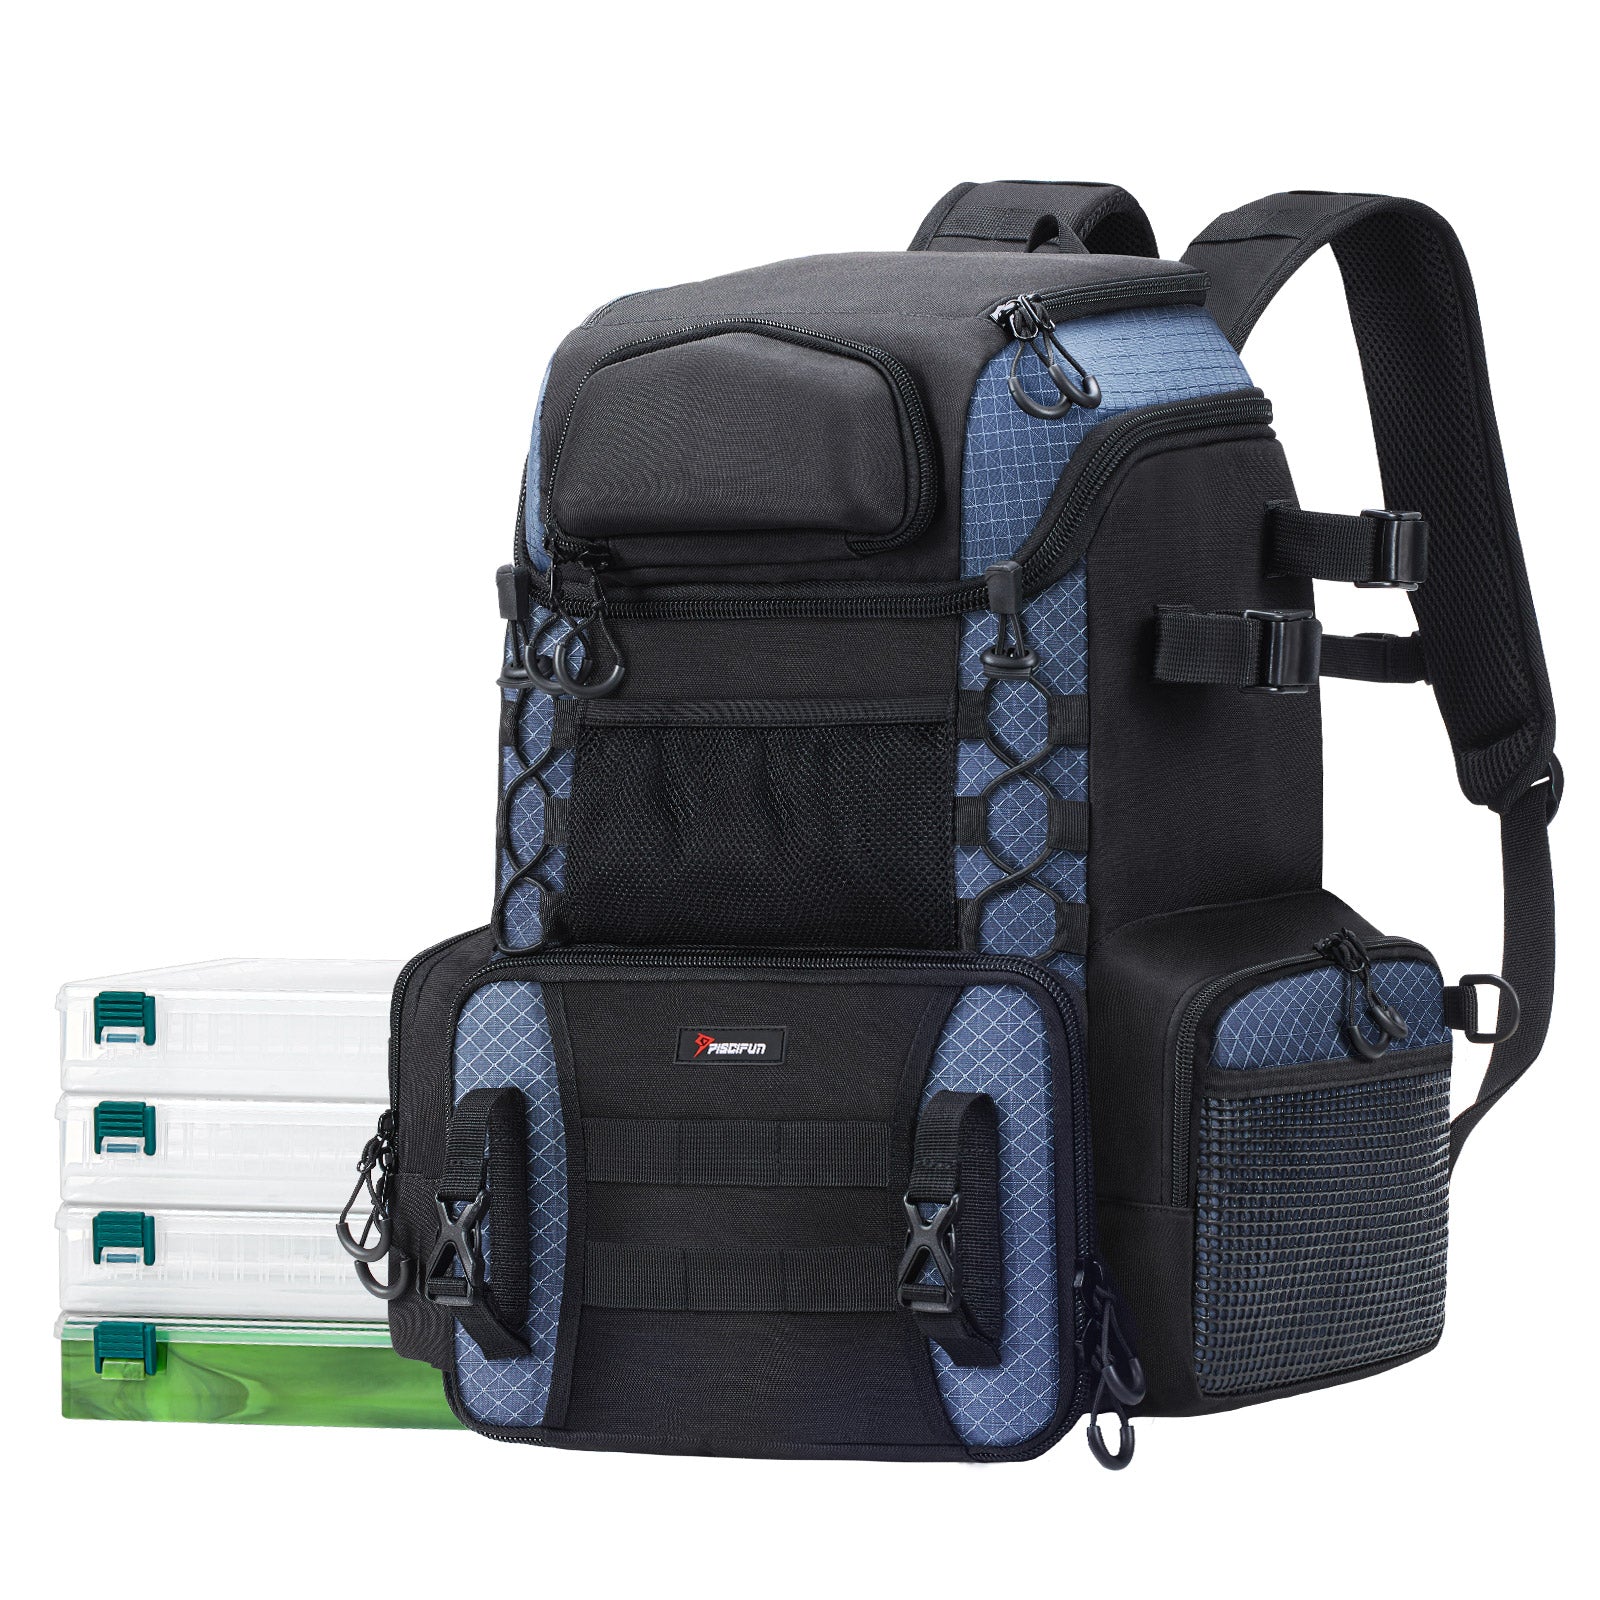 Piscifun NEW Large Capacity Tackle Bag - Ultimate Fishing Bag for